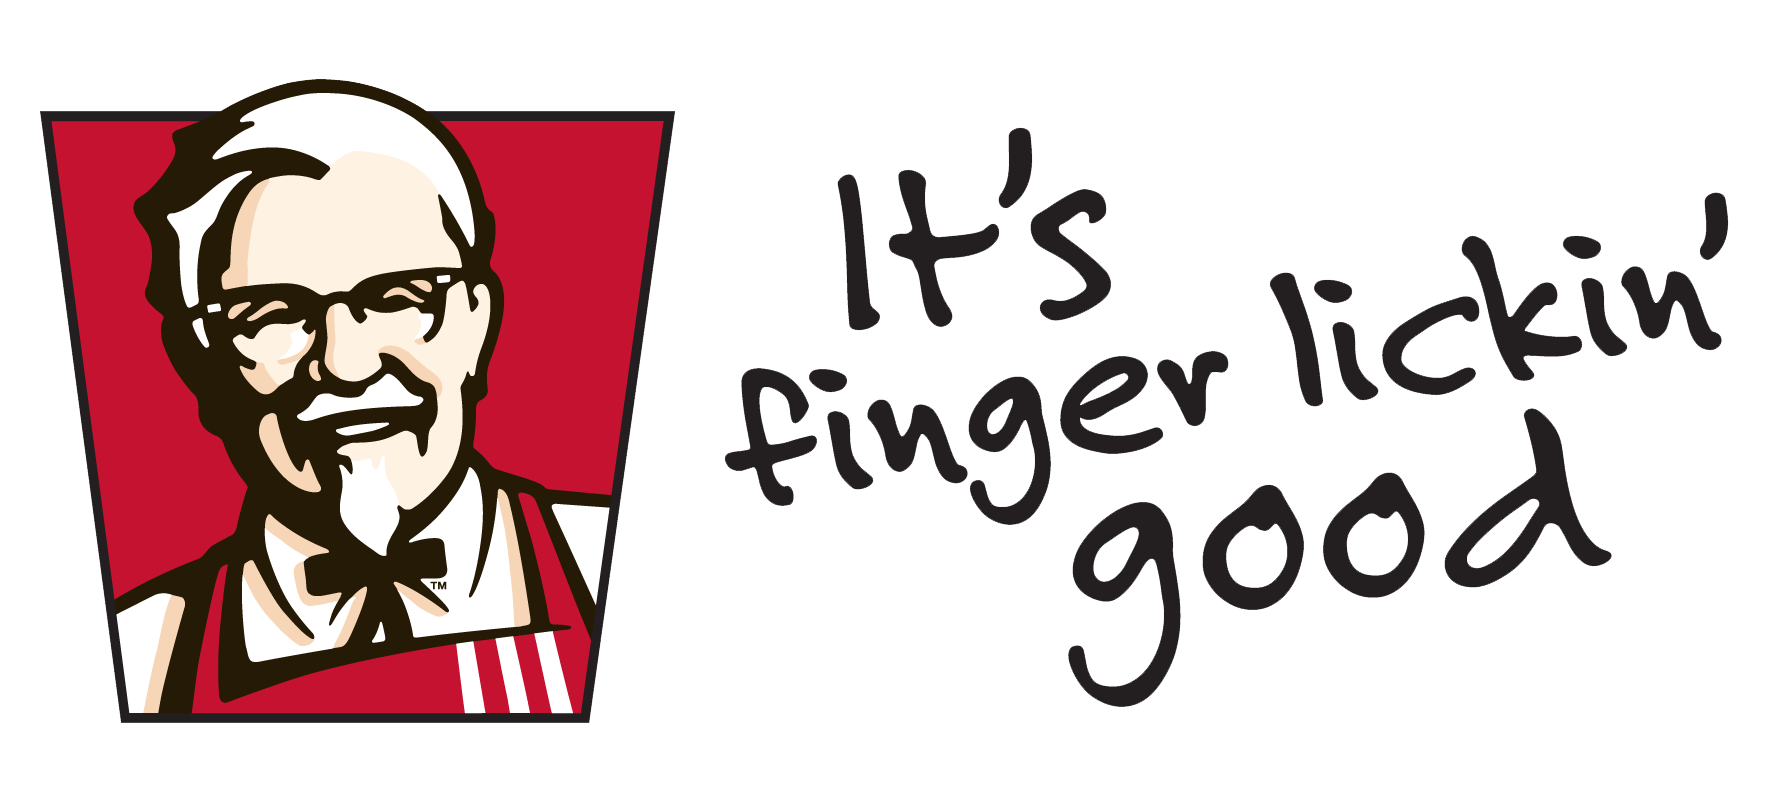 slogan của KFC